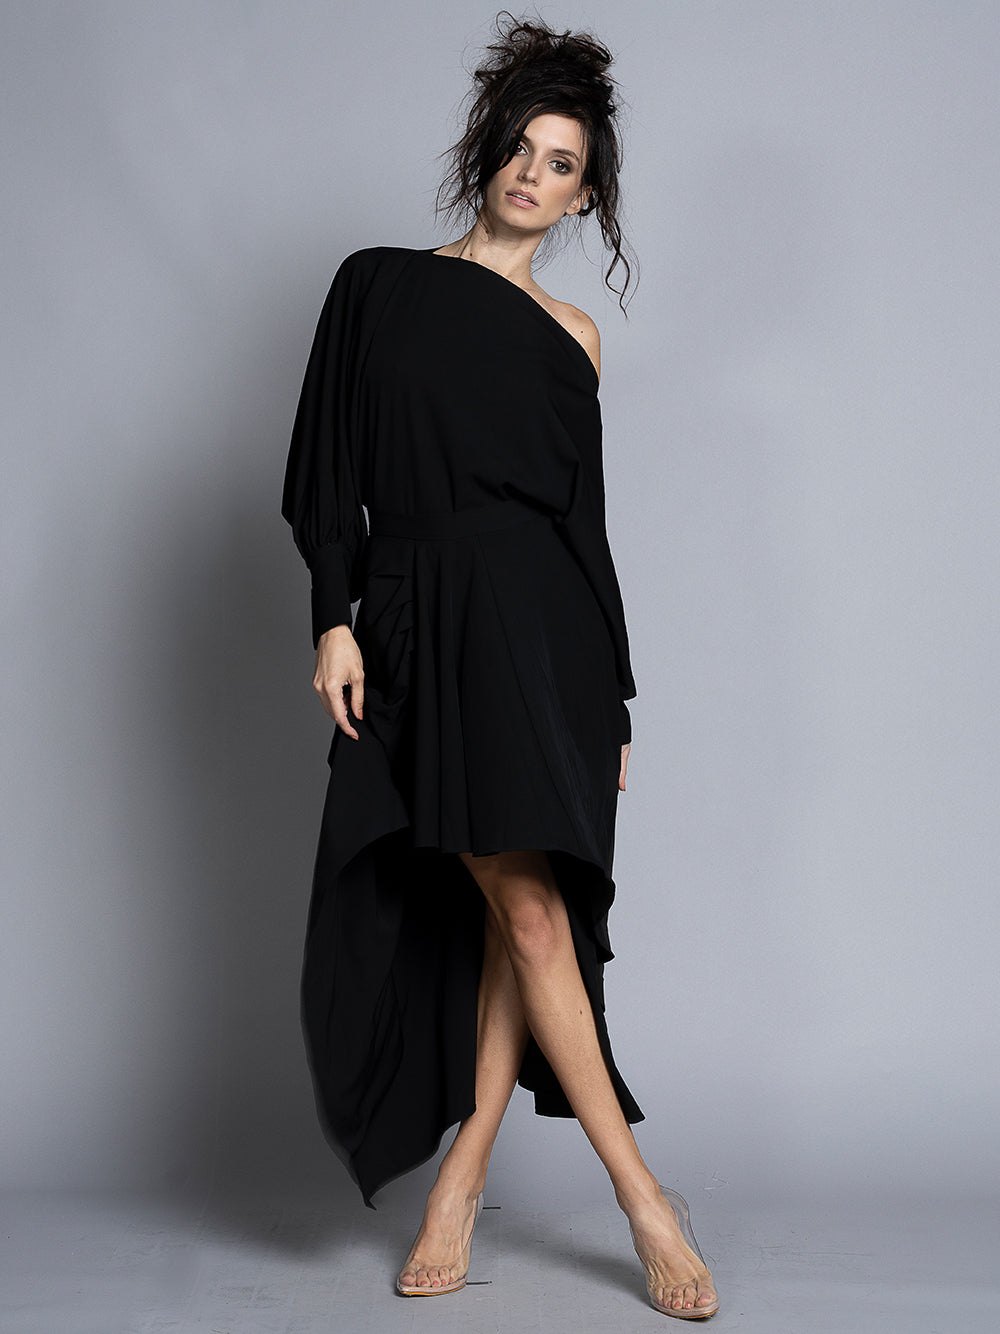 SULLIVAN Top & Skirt Set in Black